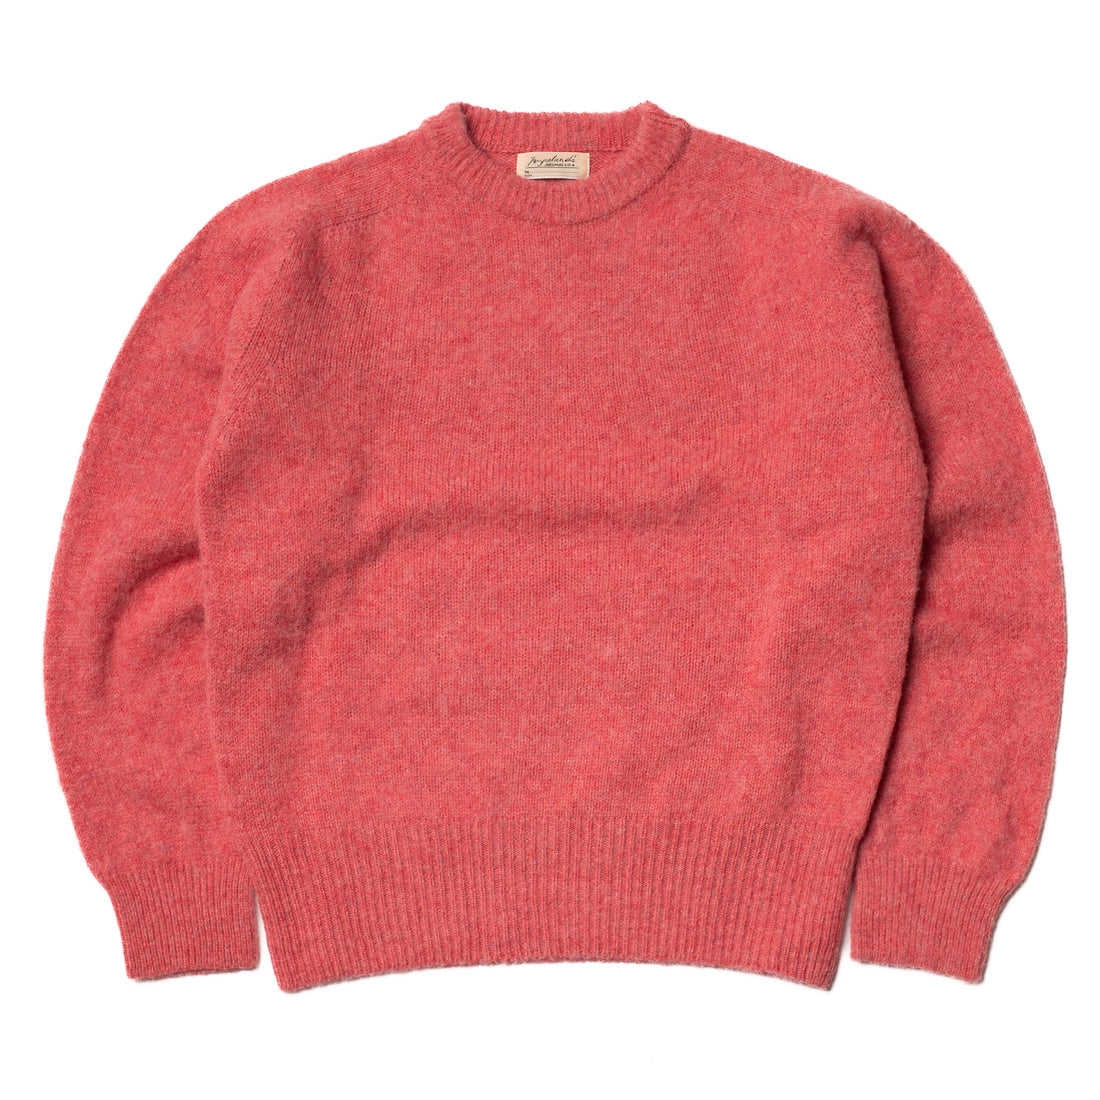 Bryceland's Shaggy Shetland Sweater Rose